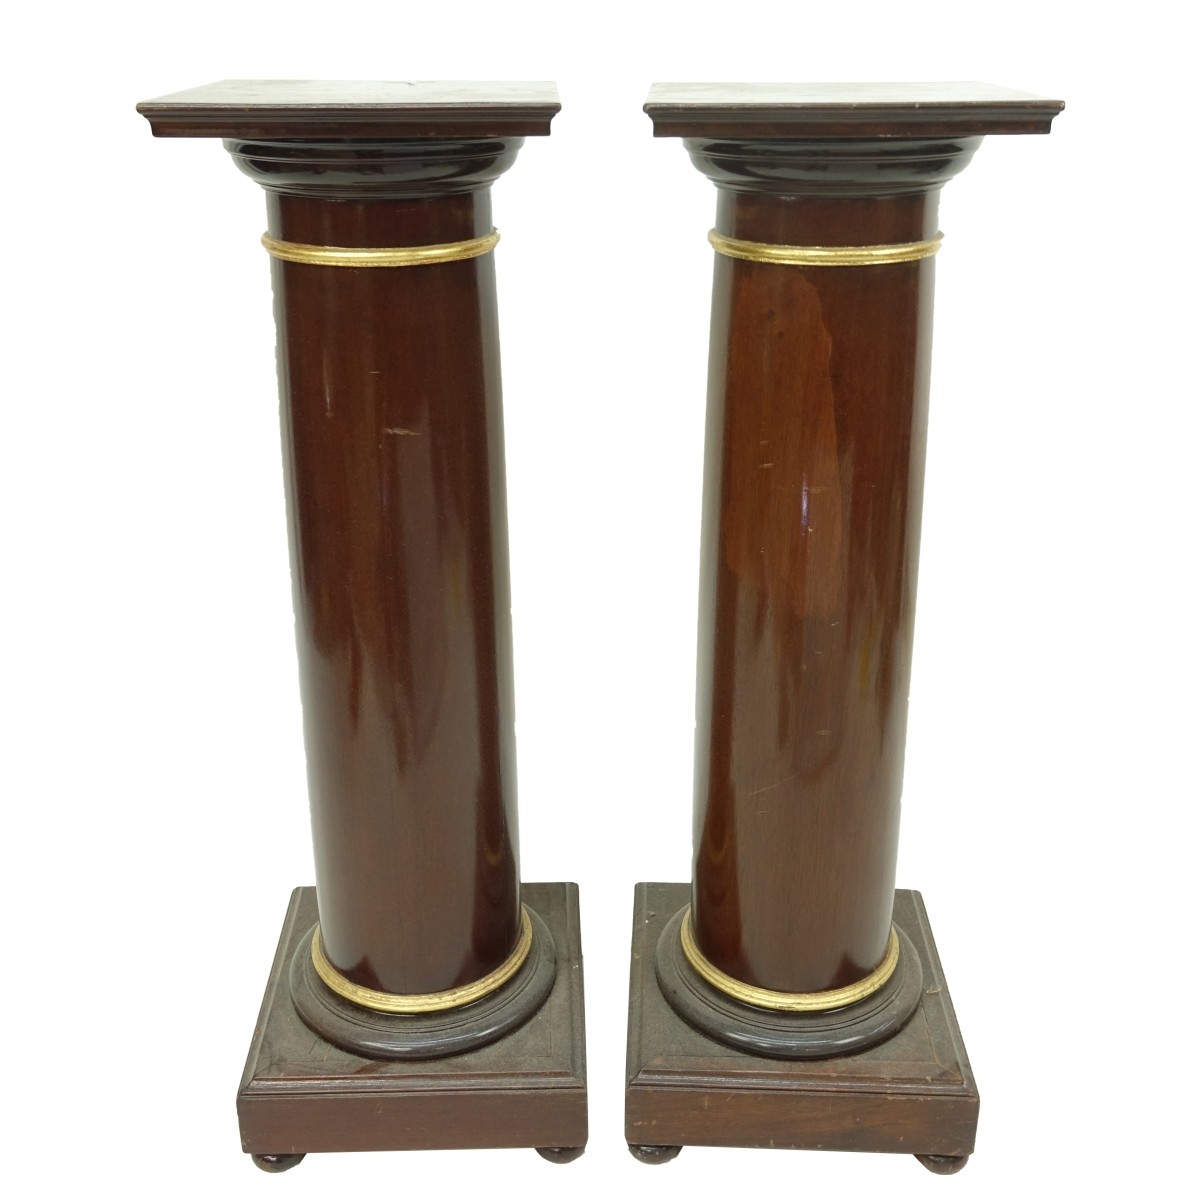 Pair of Wooden Pedestal